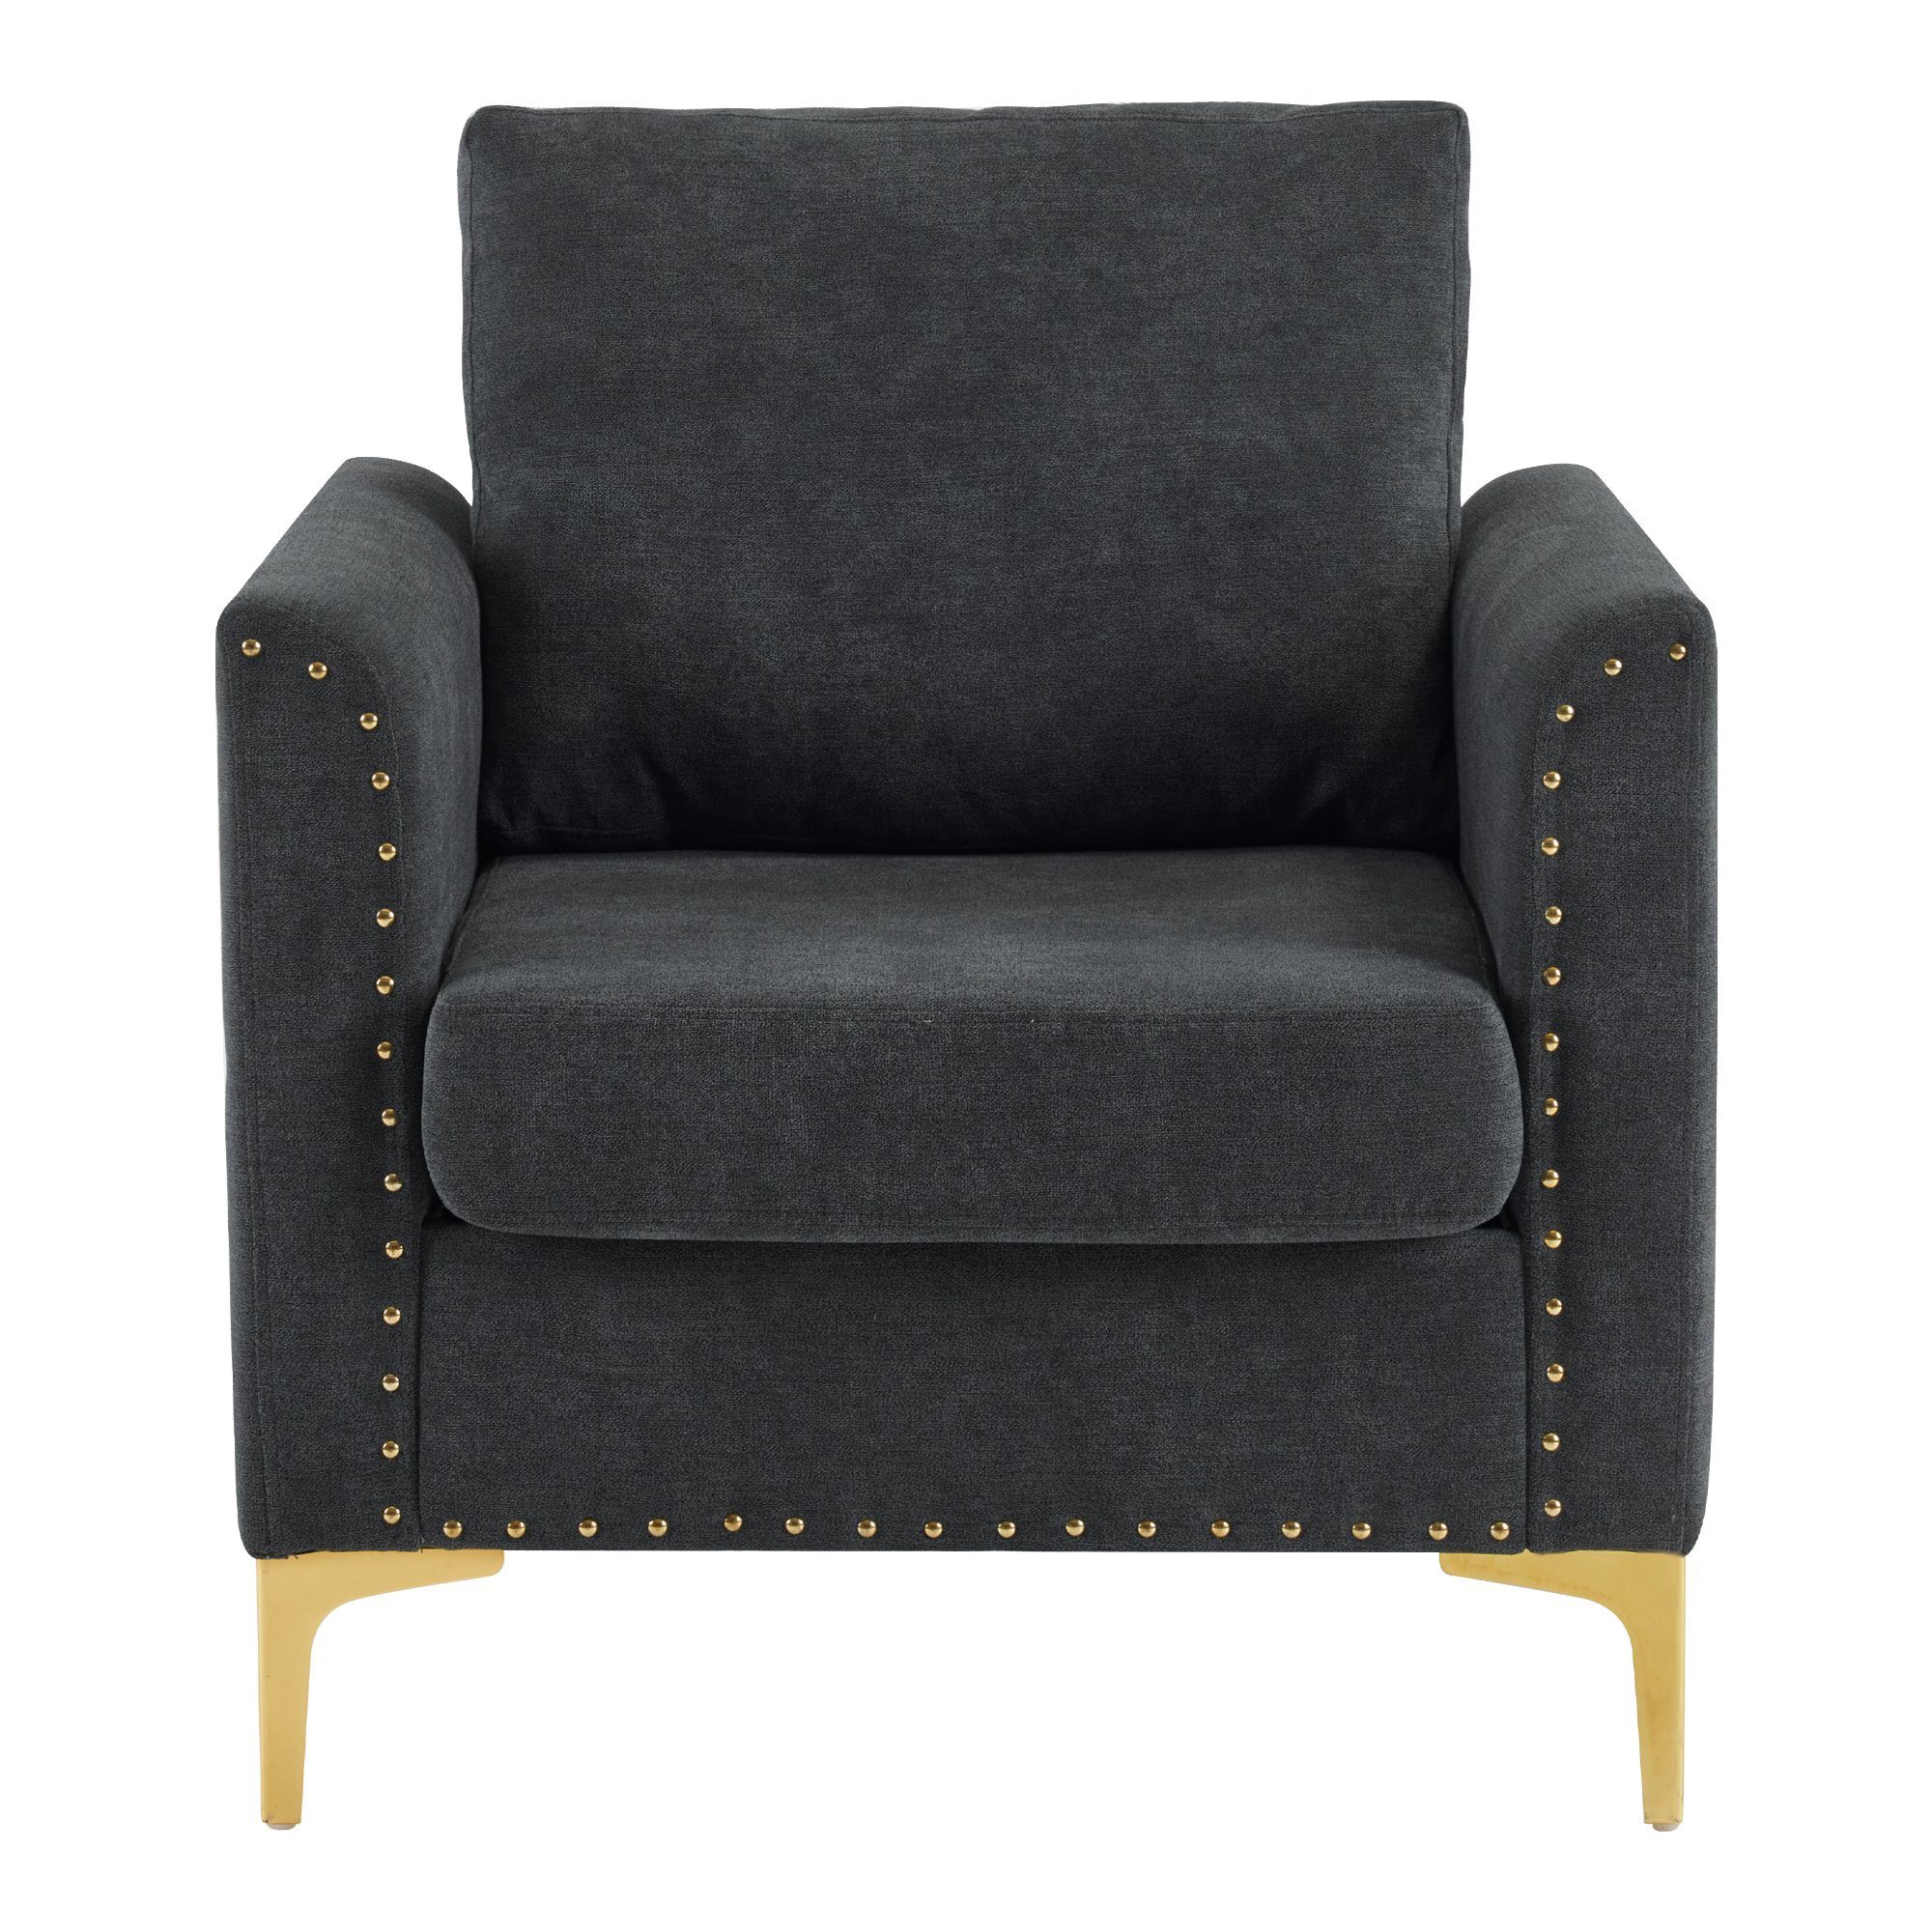 GLIESE Sessel Moderner Chenille-Stoffstuhl, Lounge-Sessel, Ohrensessel,mit Kissen grau | Einzelsessel